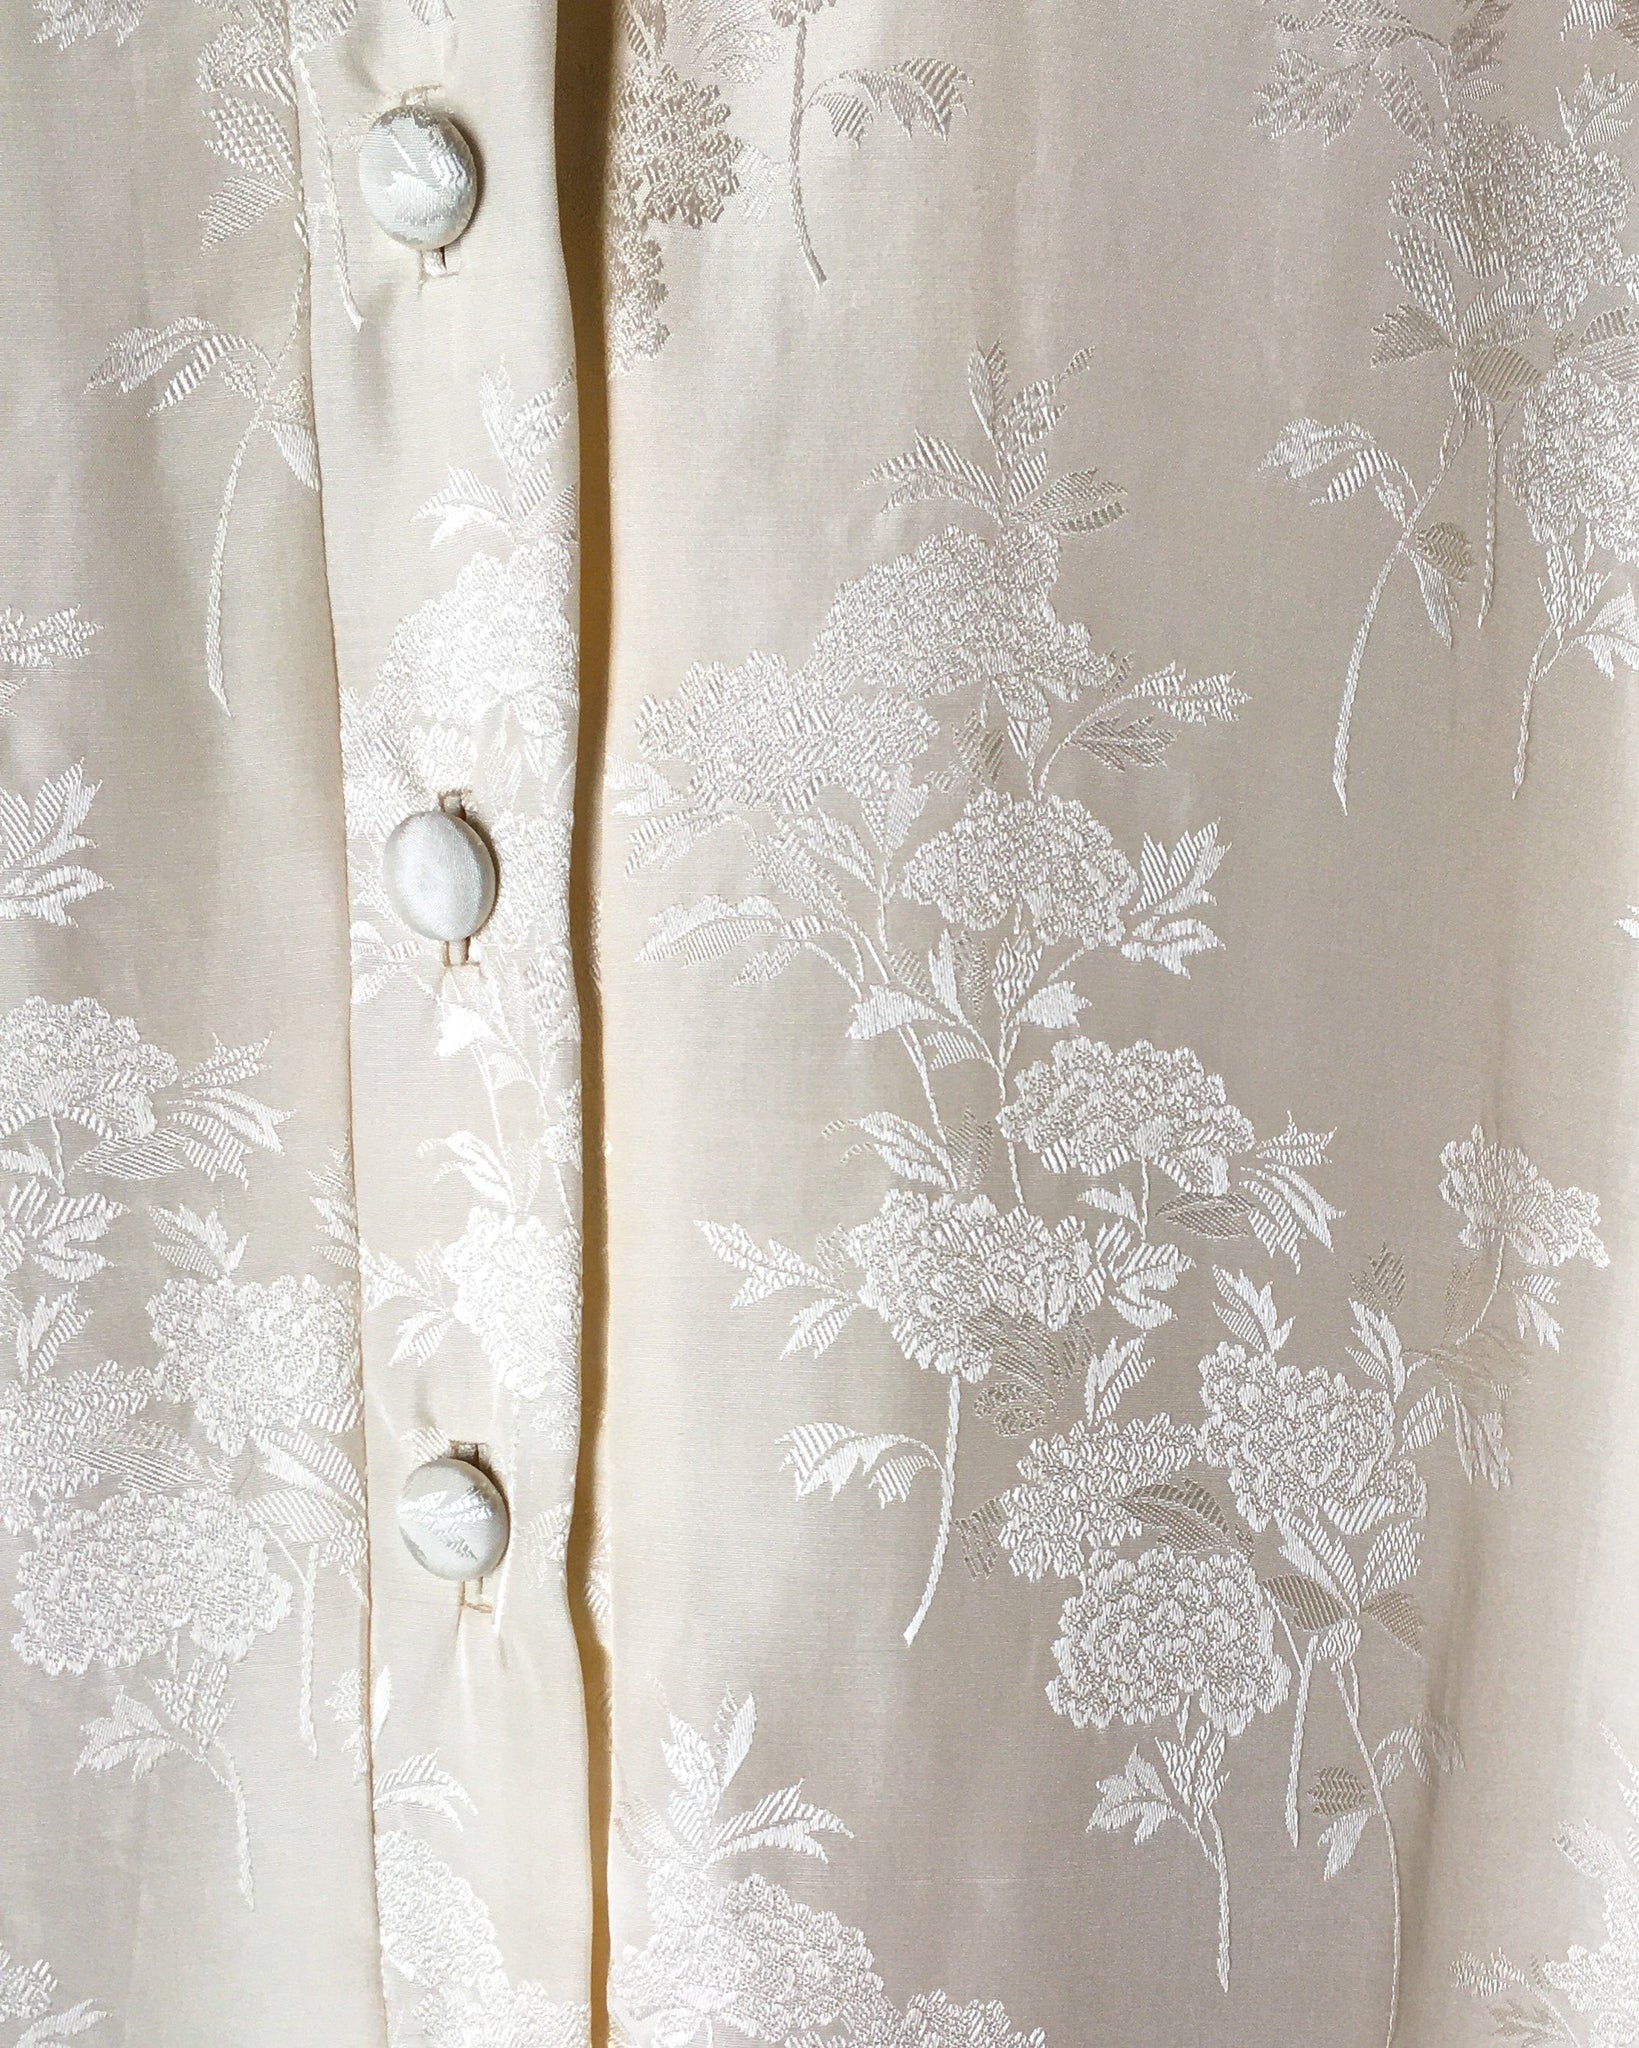 Ivory Silk Chinoiserie Tunic Dress